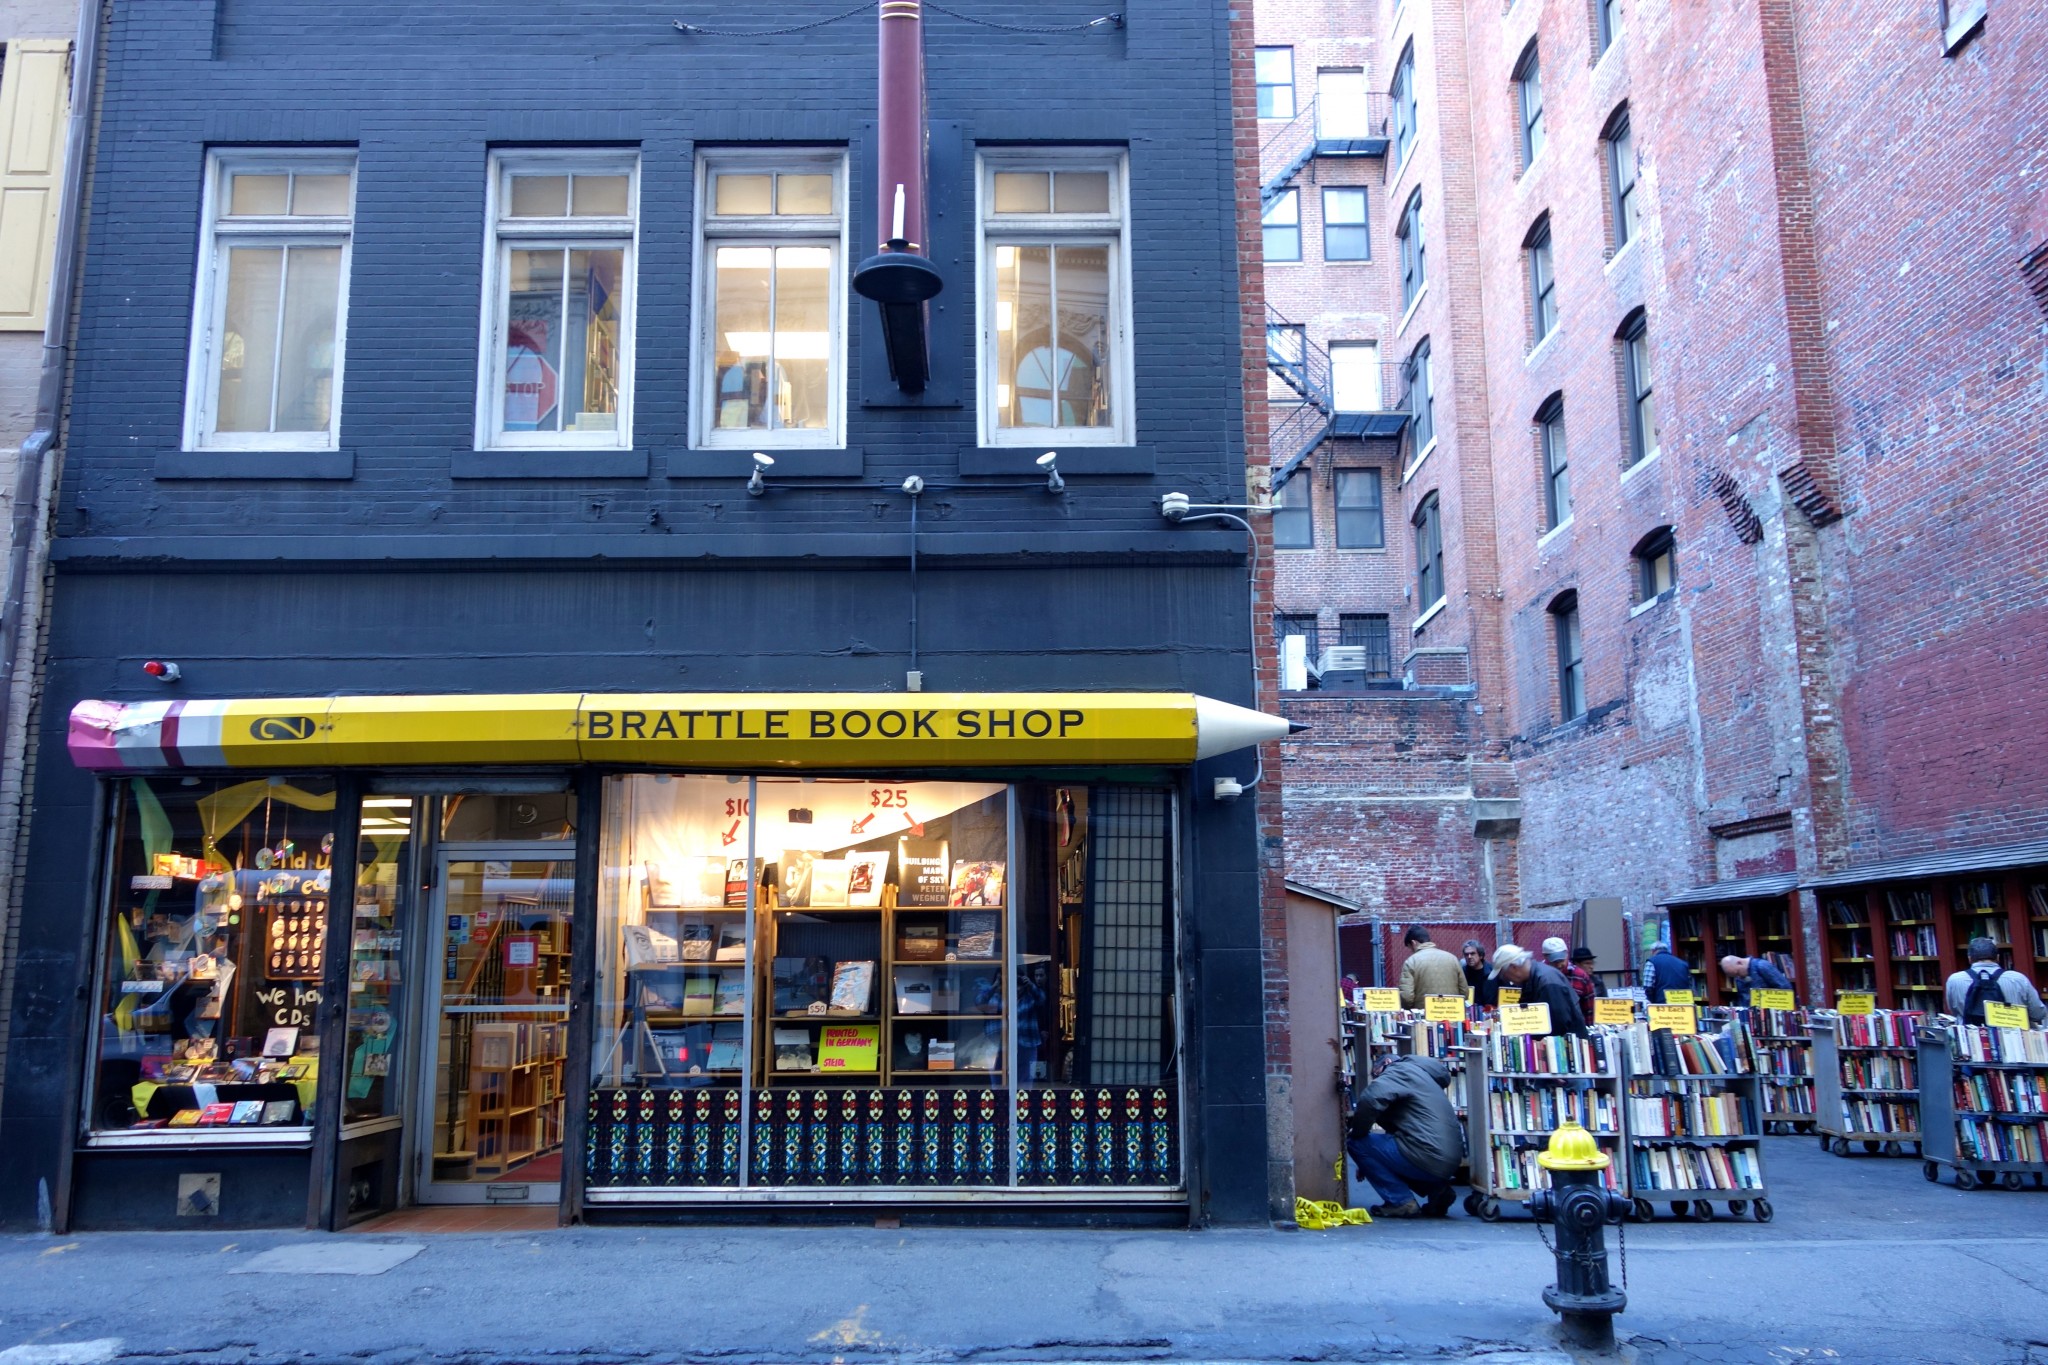 brattle book shop, the-alyst.com